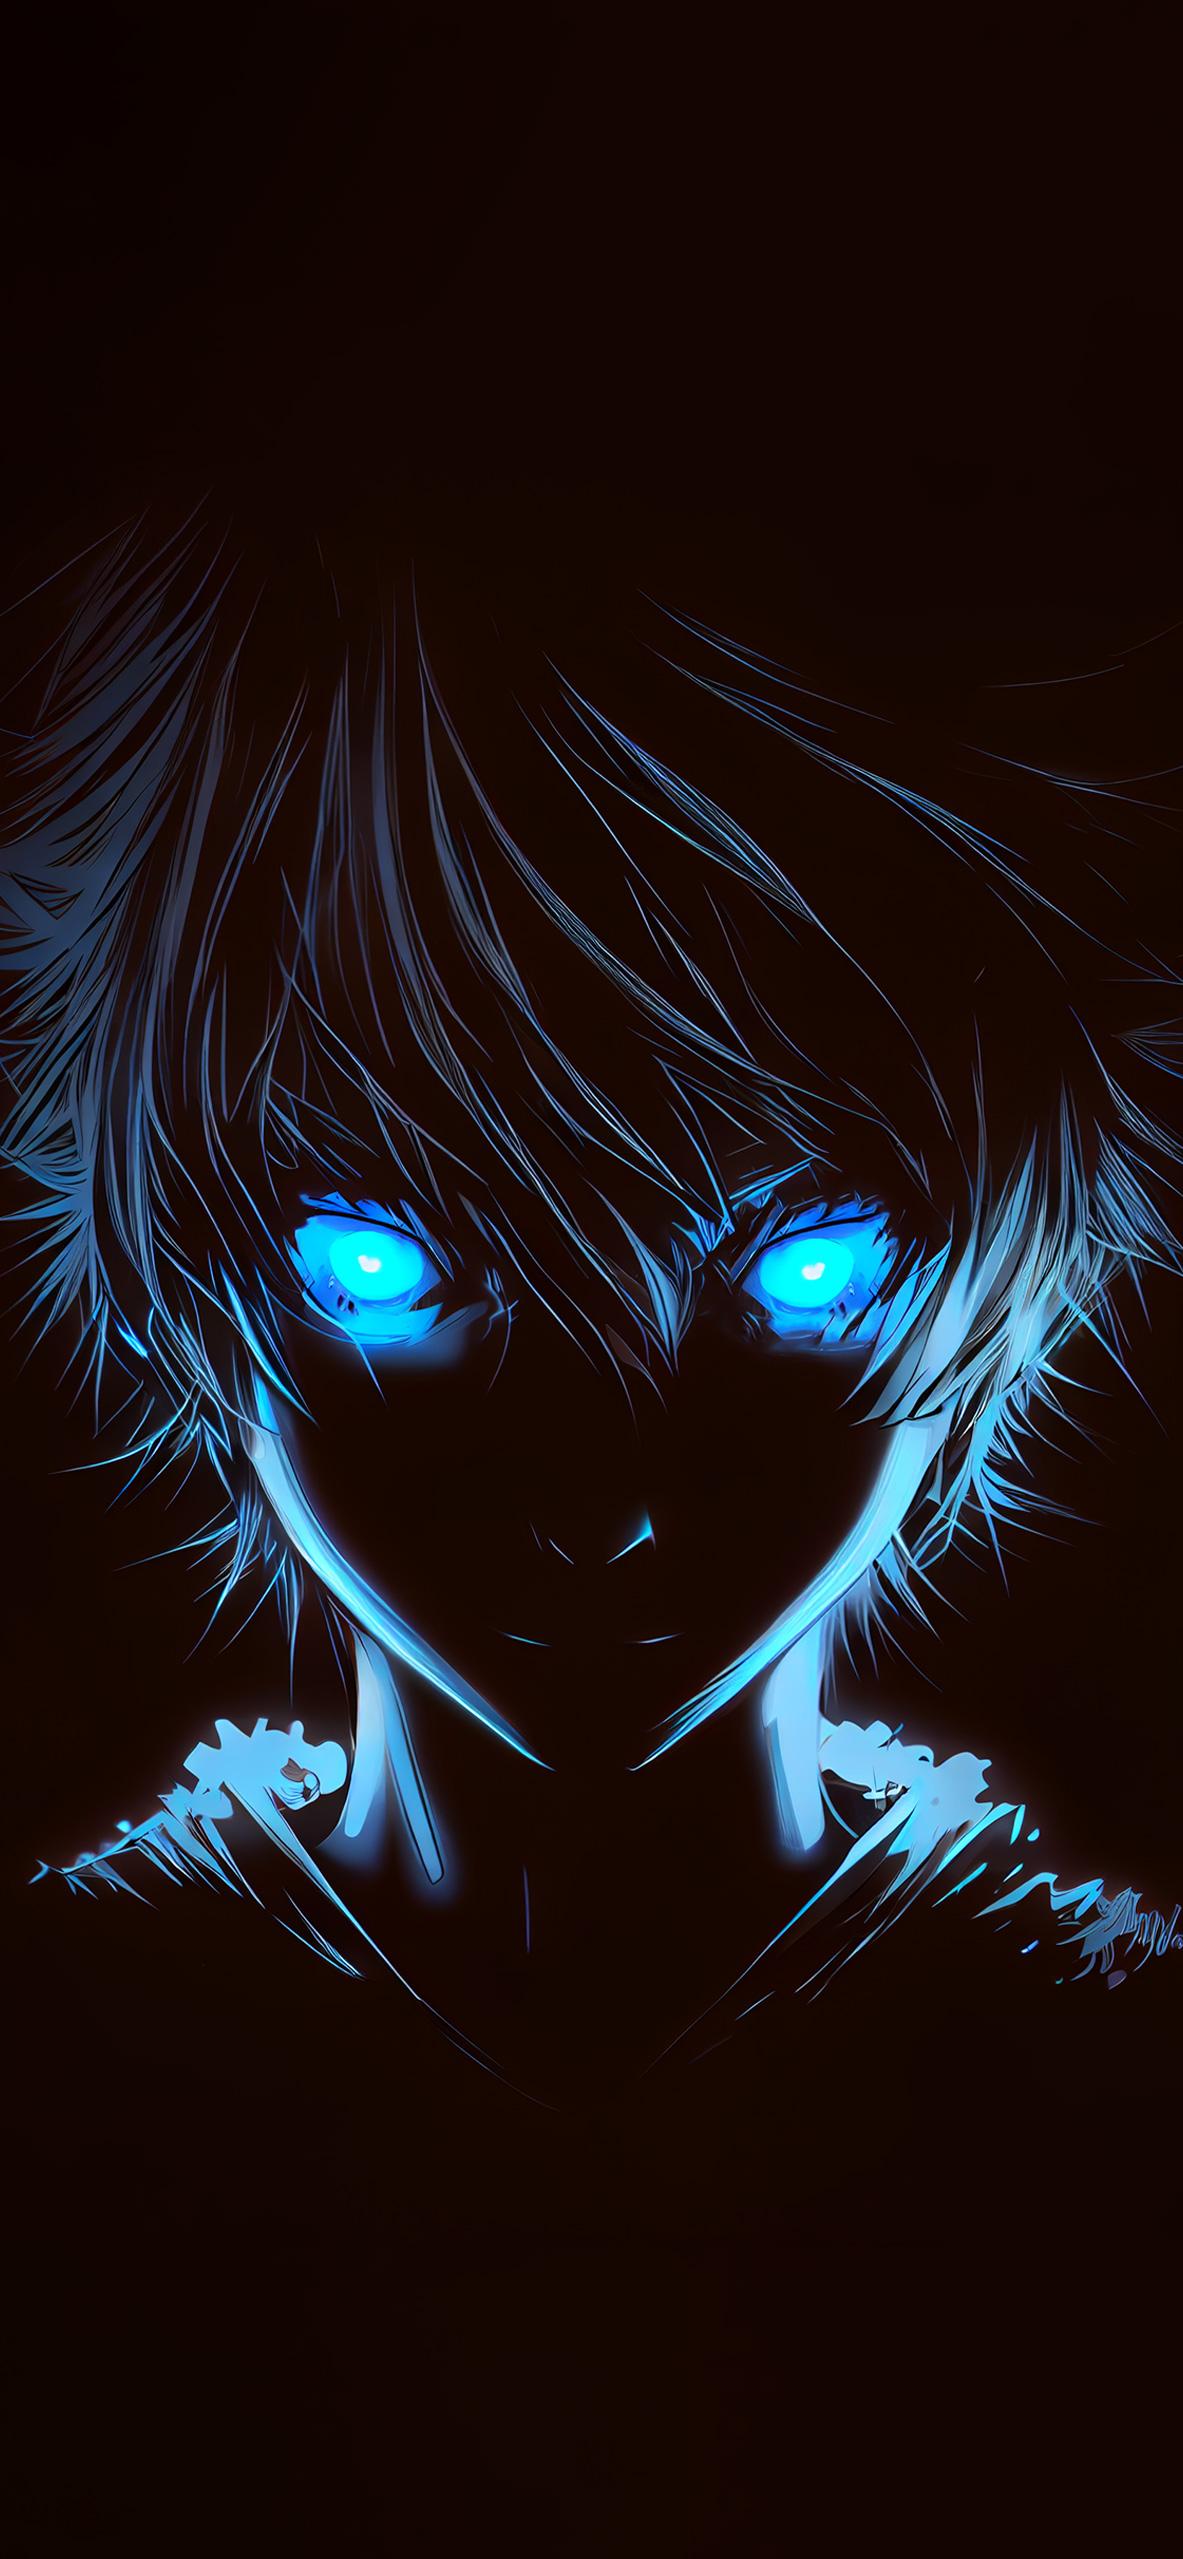 Boy with Blue Glowing Eyes Anime Wallpaper Anime Wallpaper 4k